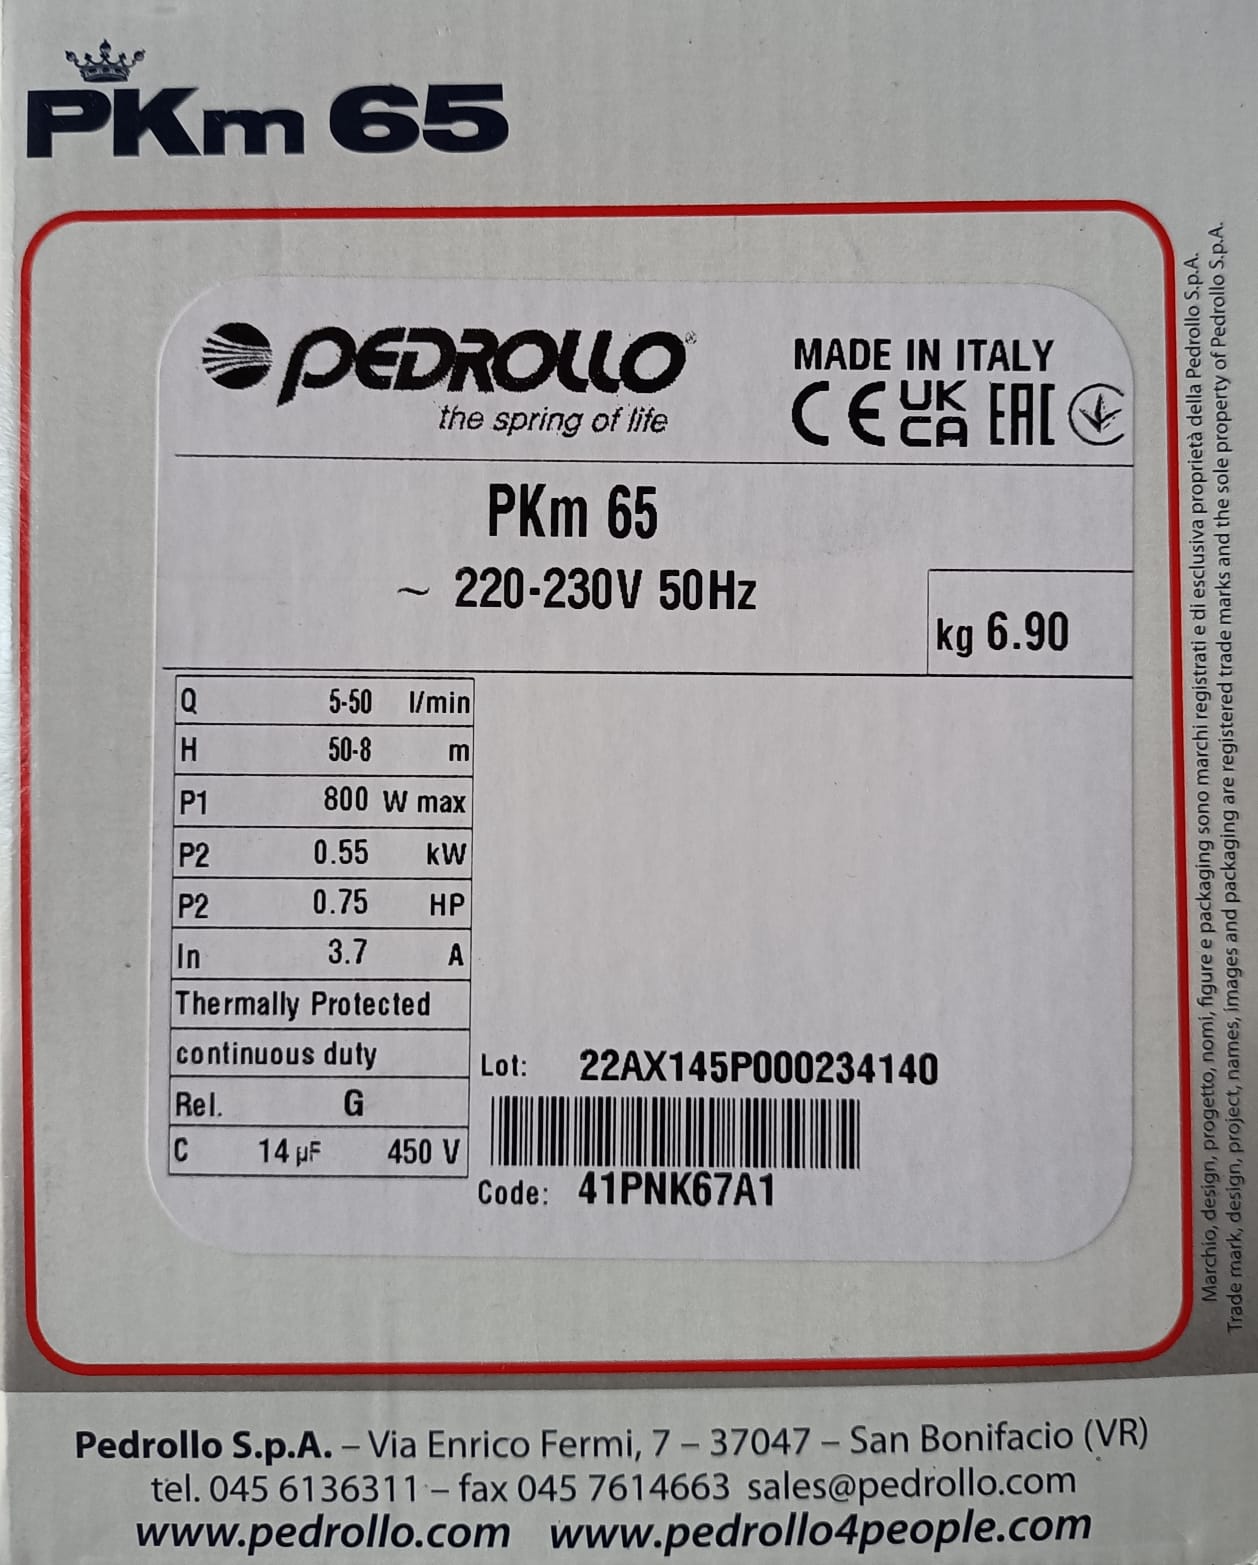 Elektropumpe Pedrollo PKm 65 PS 0,70 mit einphasigem peripherem Laufrad